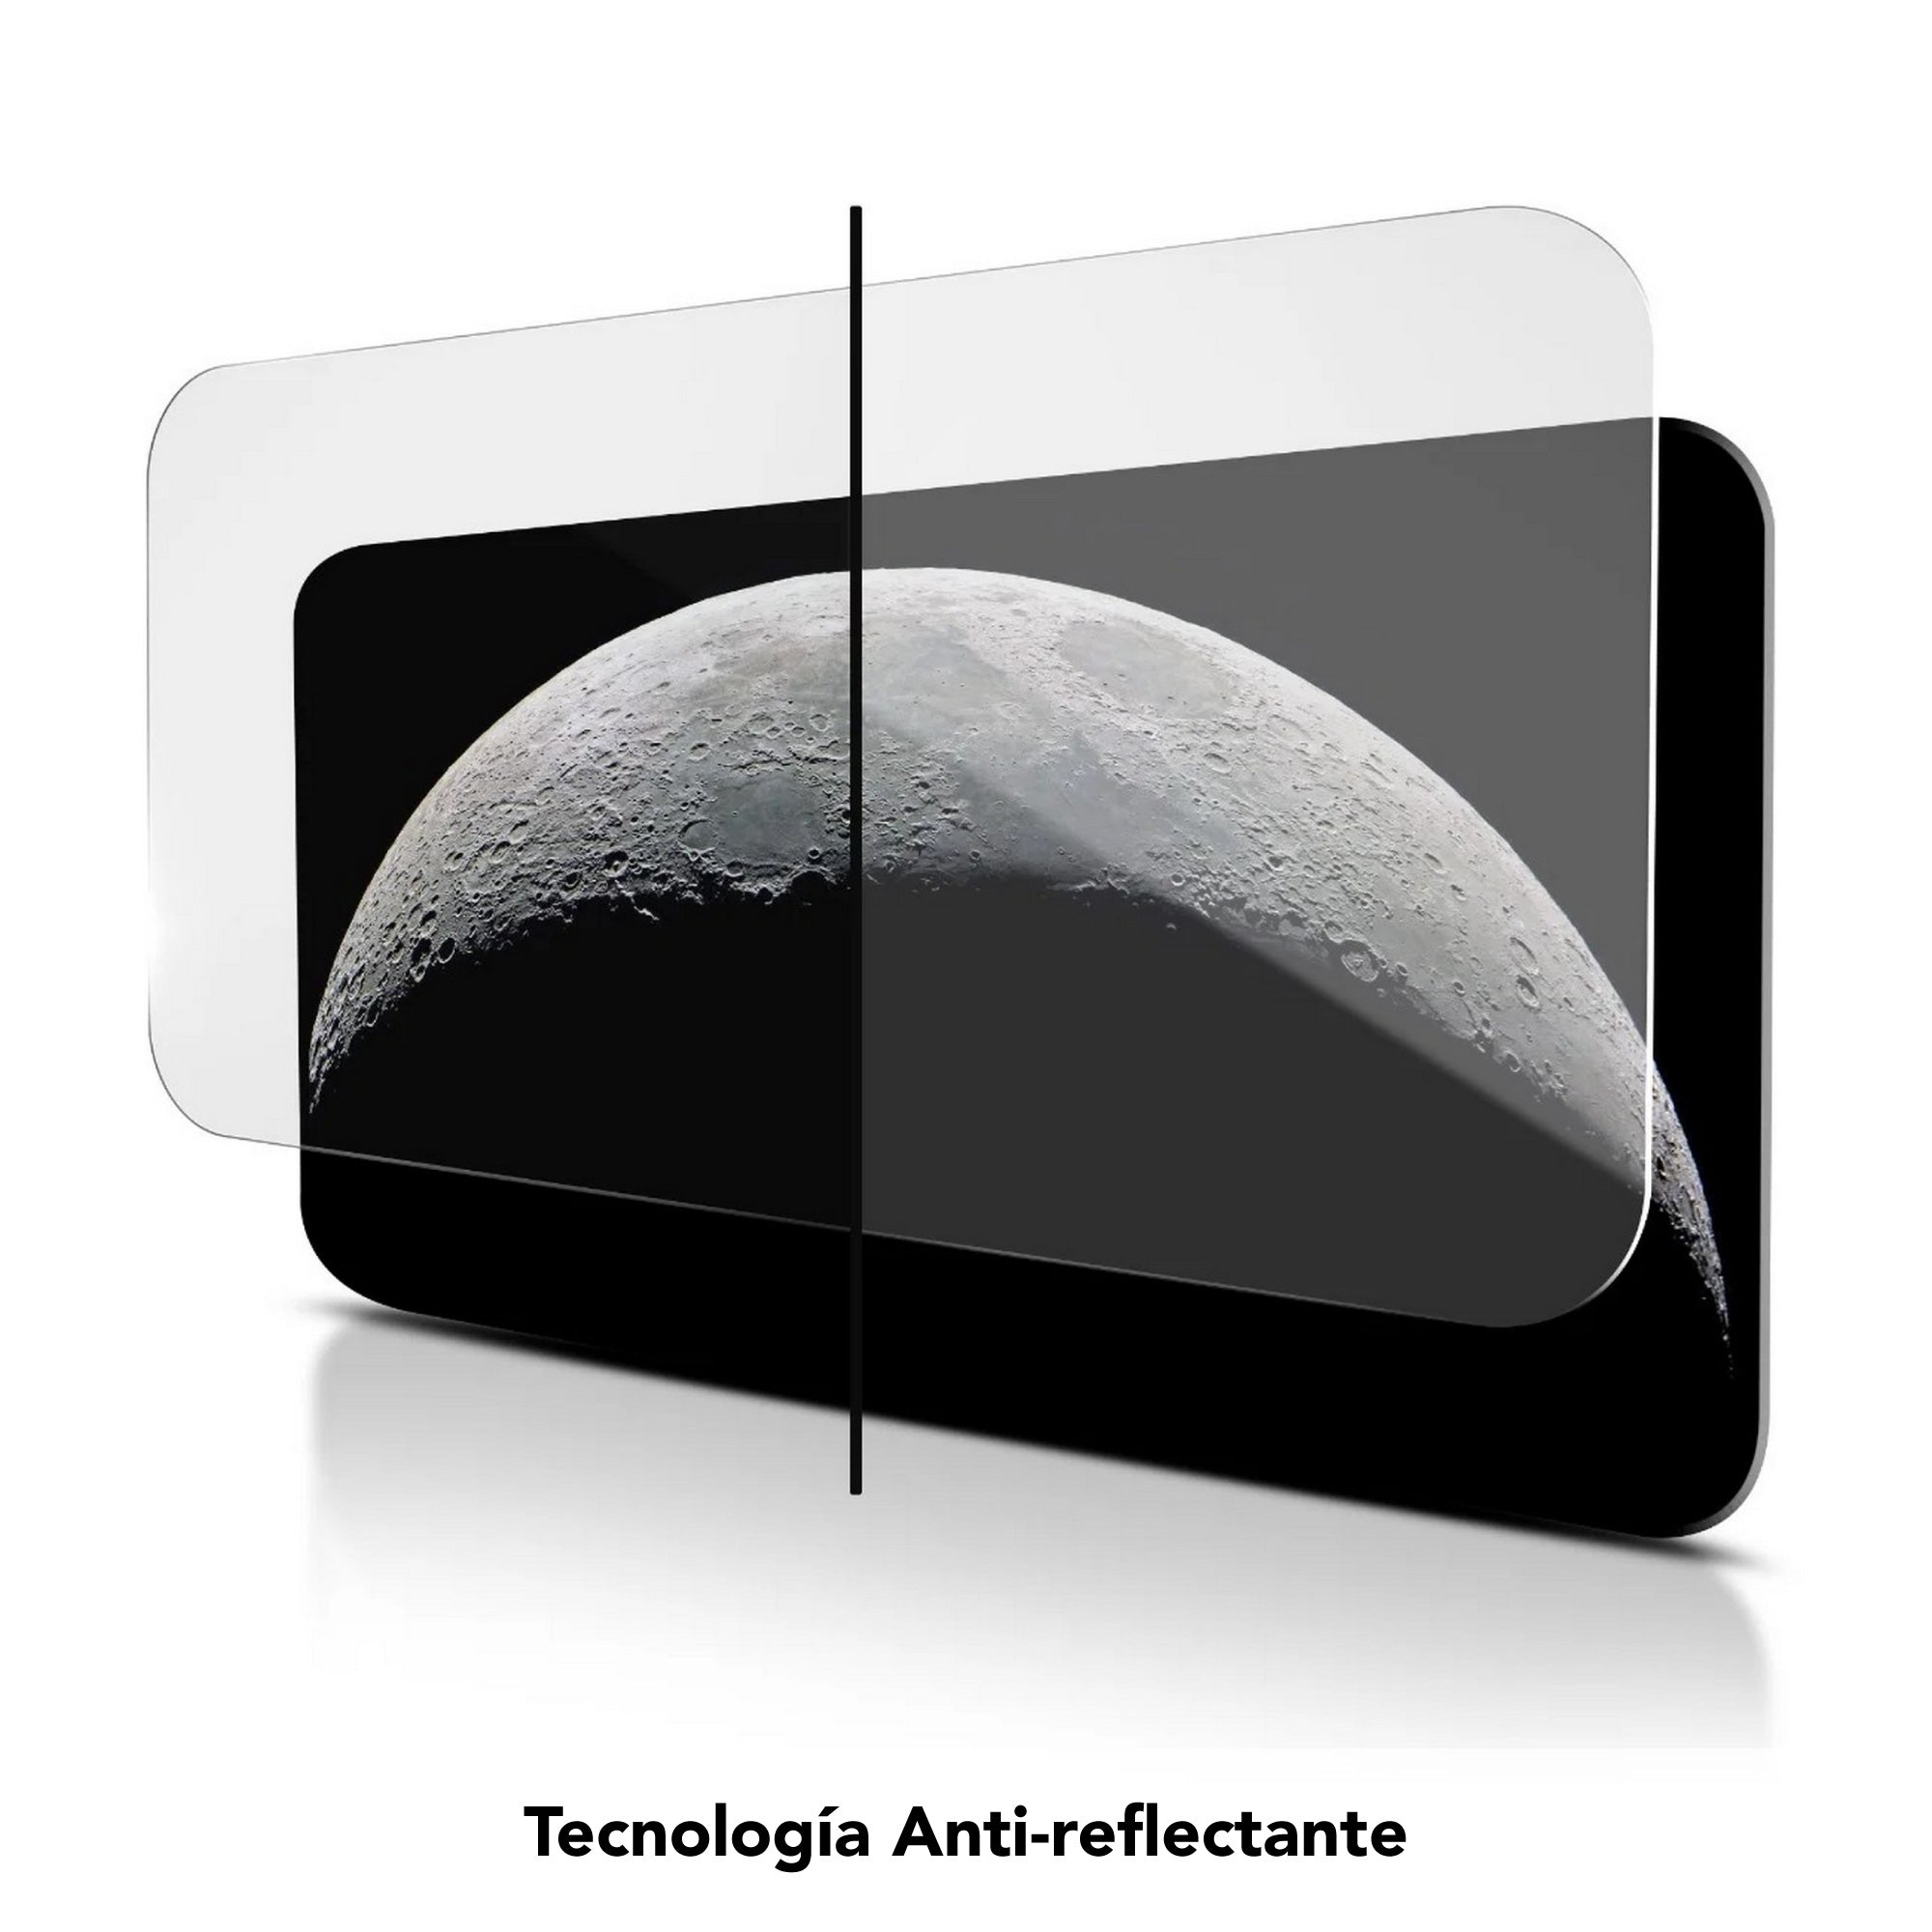 Protector de Pantalla InvisibleShield Glass XTR2 para iPhone 14 Pro Max